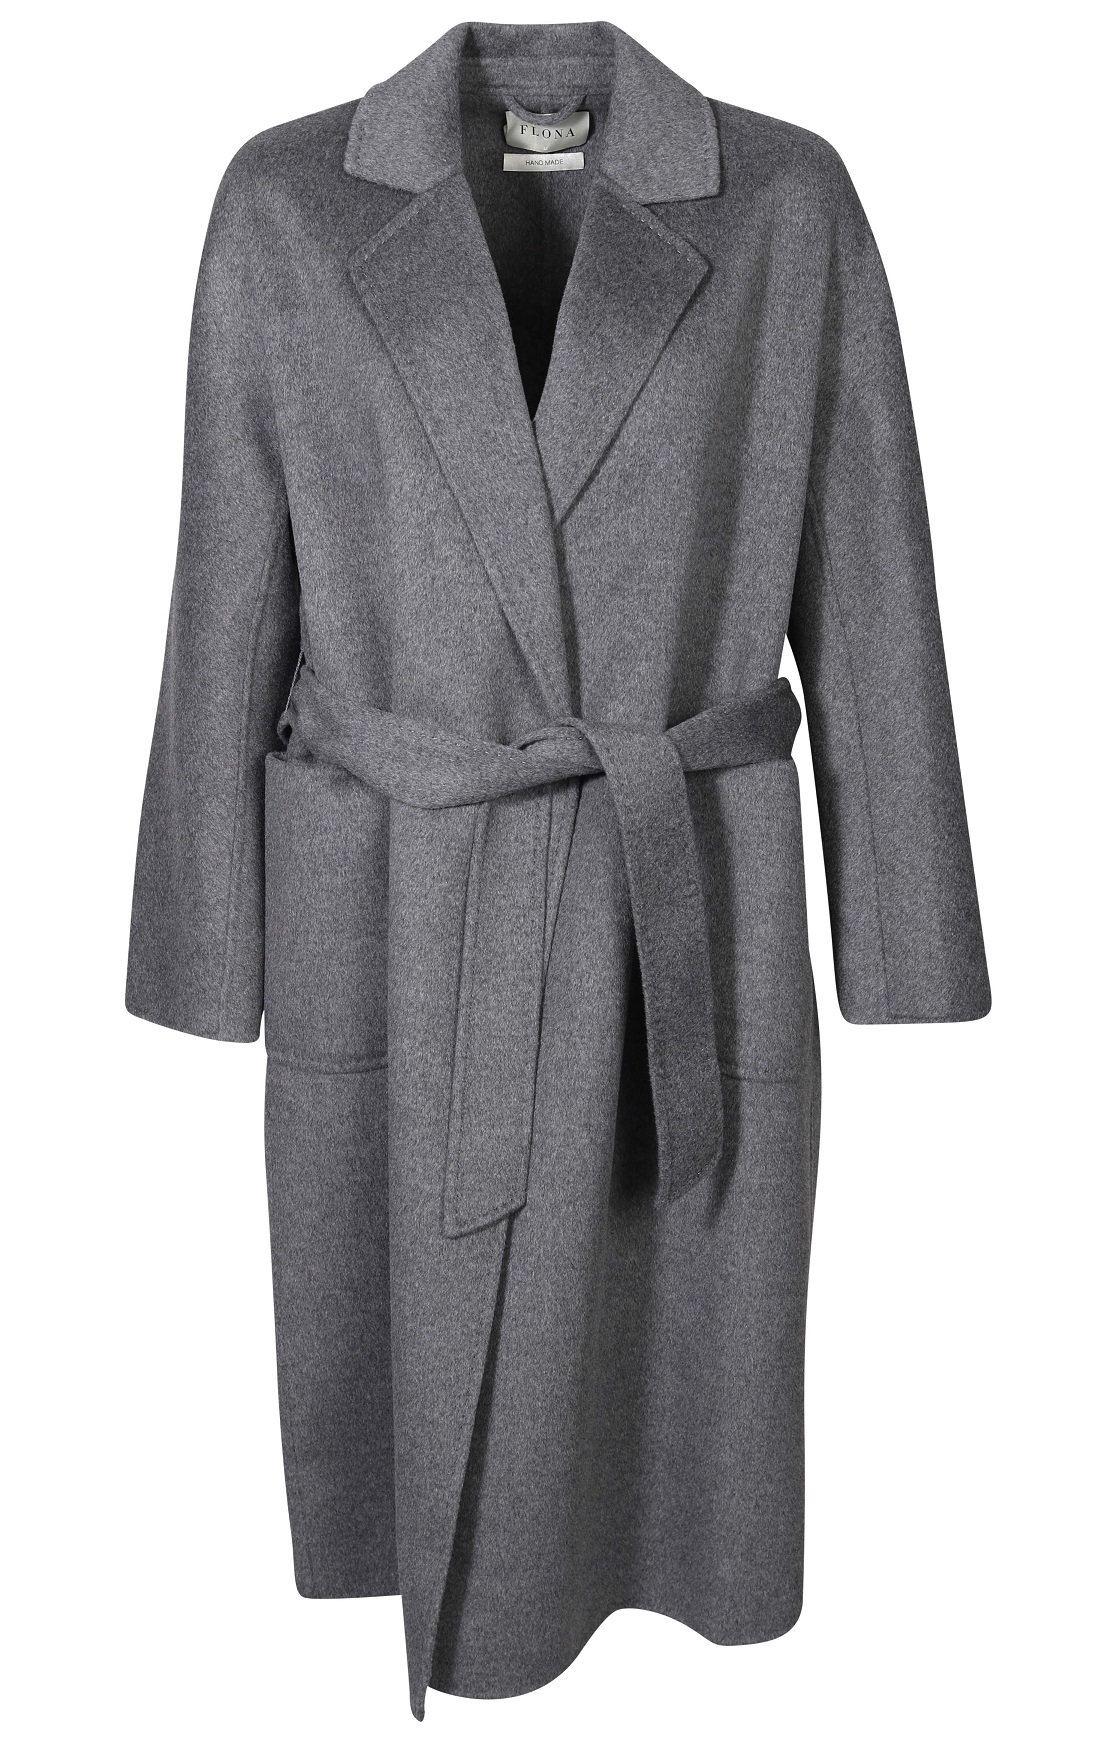 FLONA Wool/Cashmere Coat in Anthrazit XS